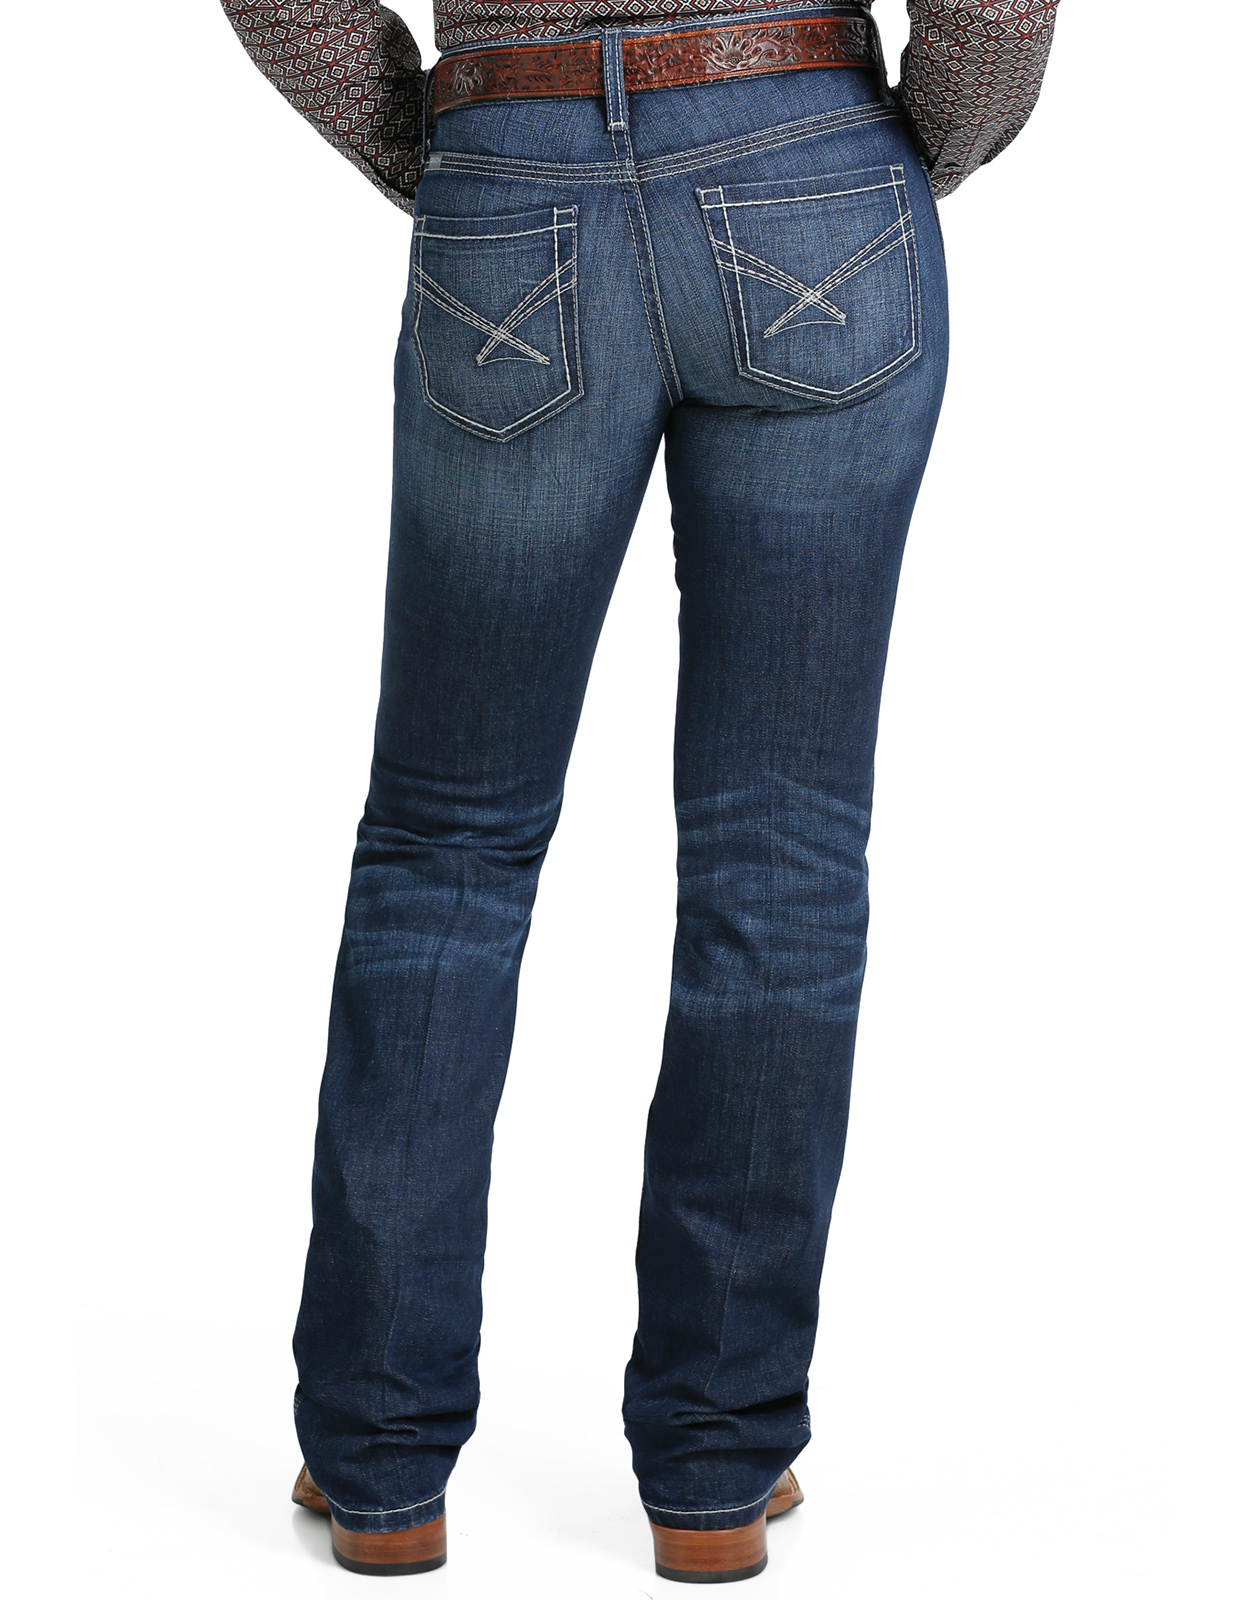 Cinch Women's Lynden Stretch Trouser Mid Rise Slim Fit Flare Leg Jeans -  Rinse